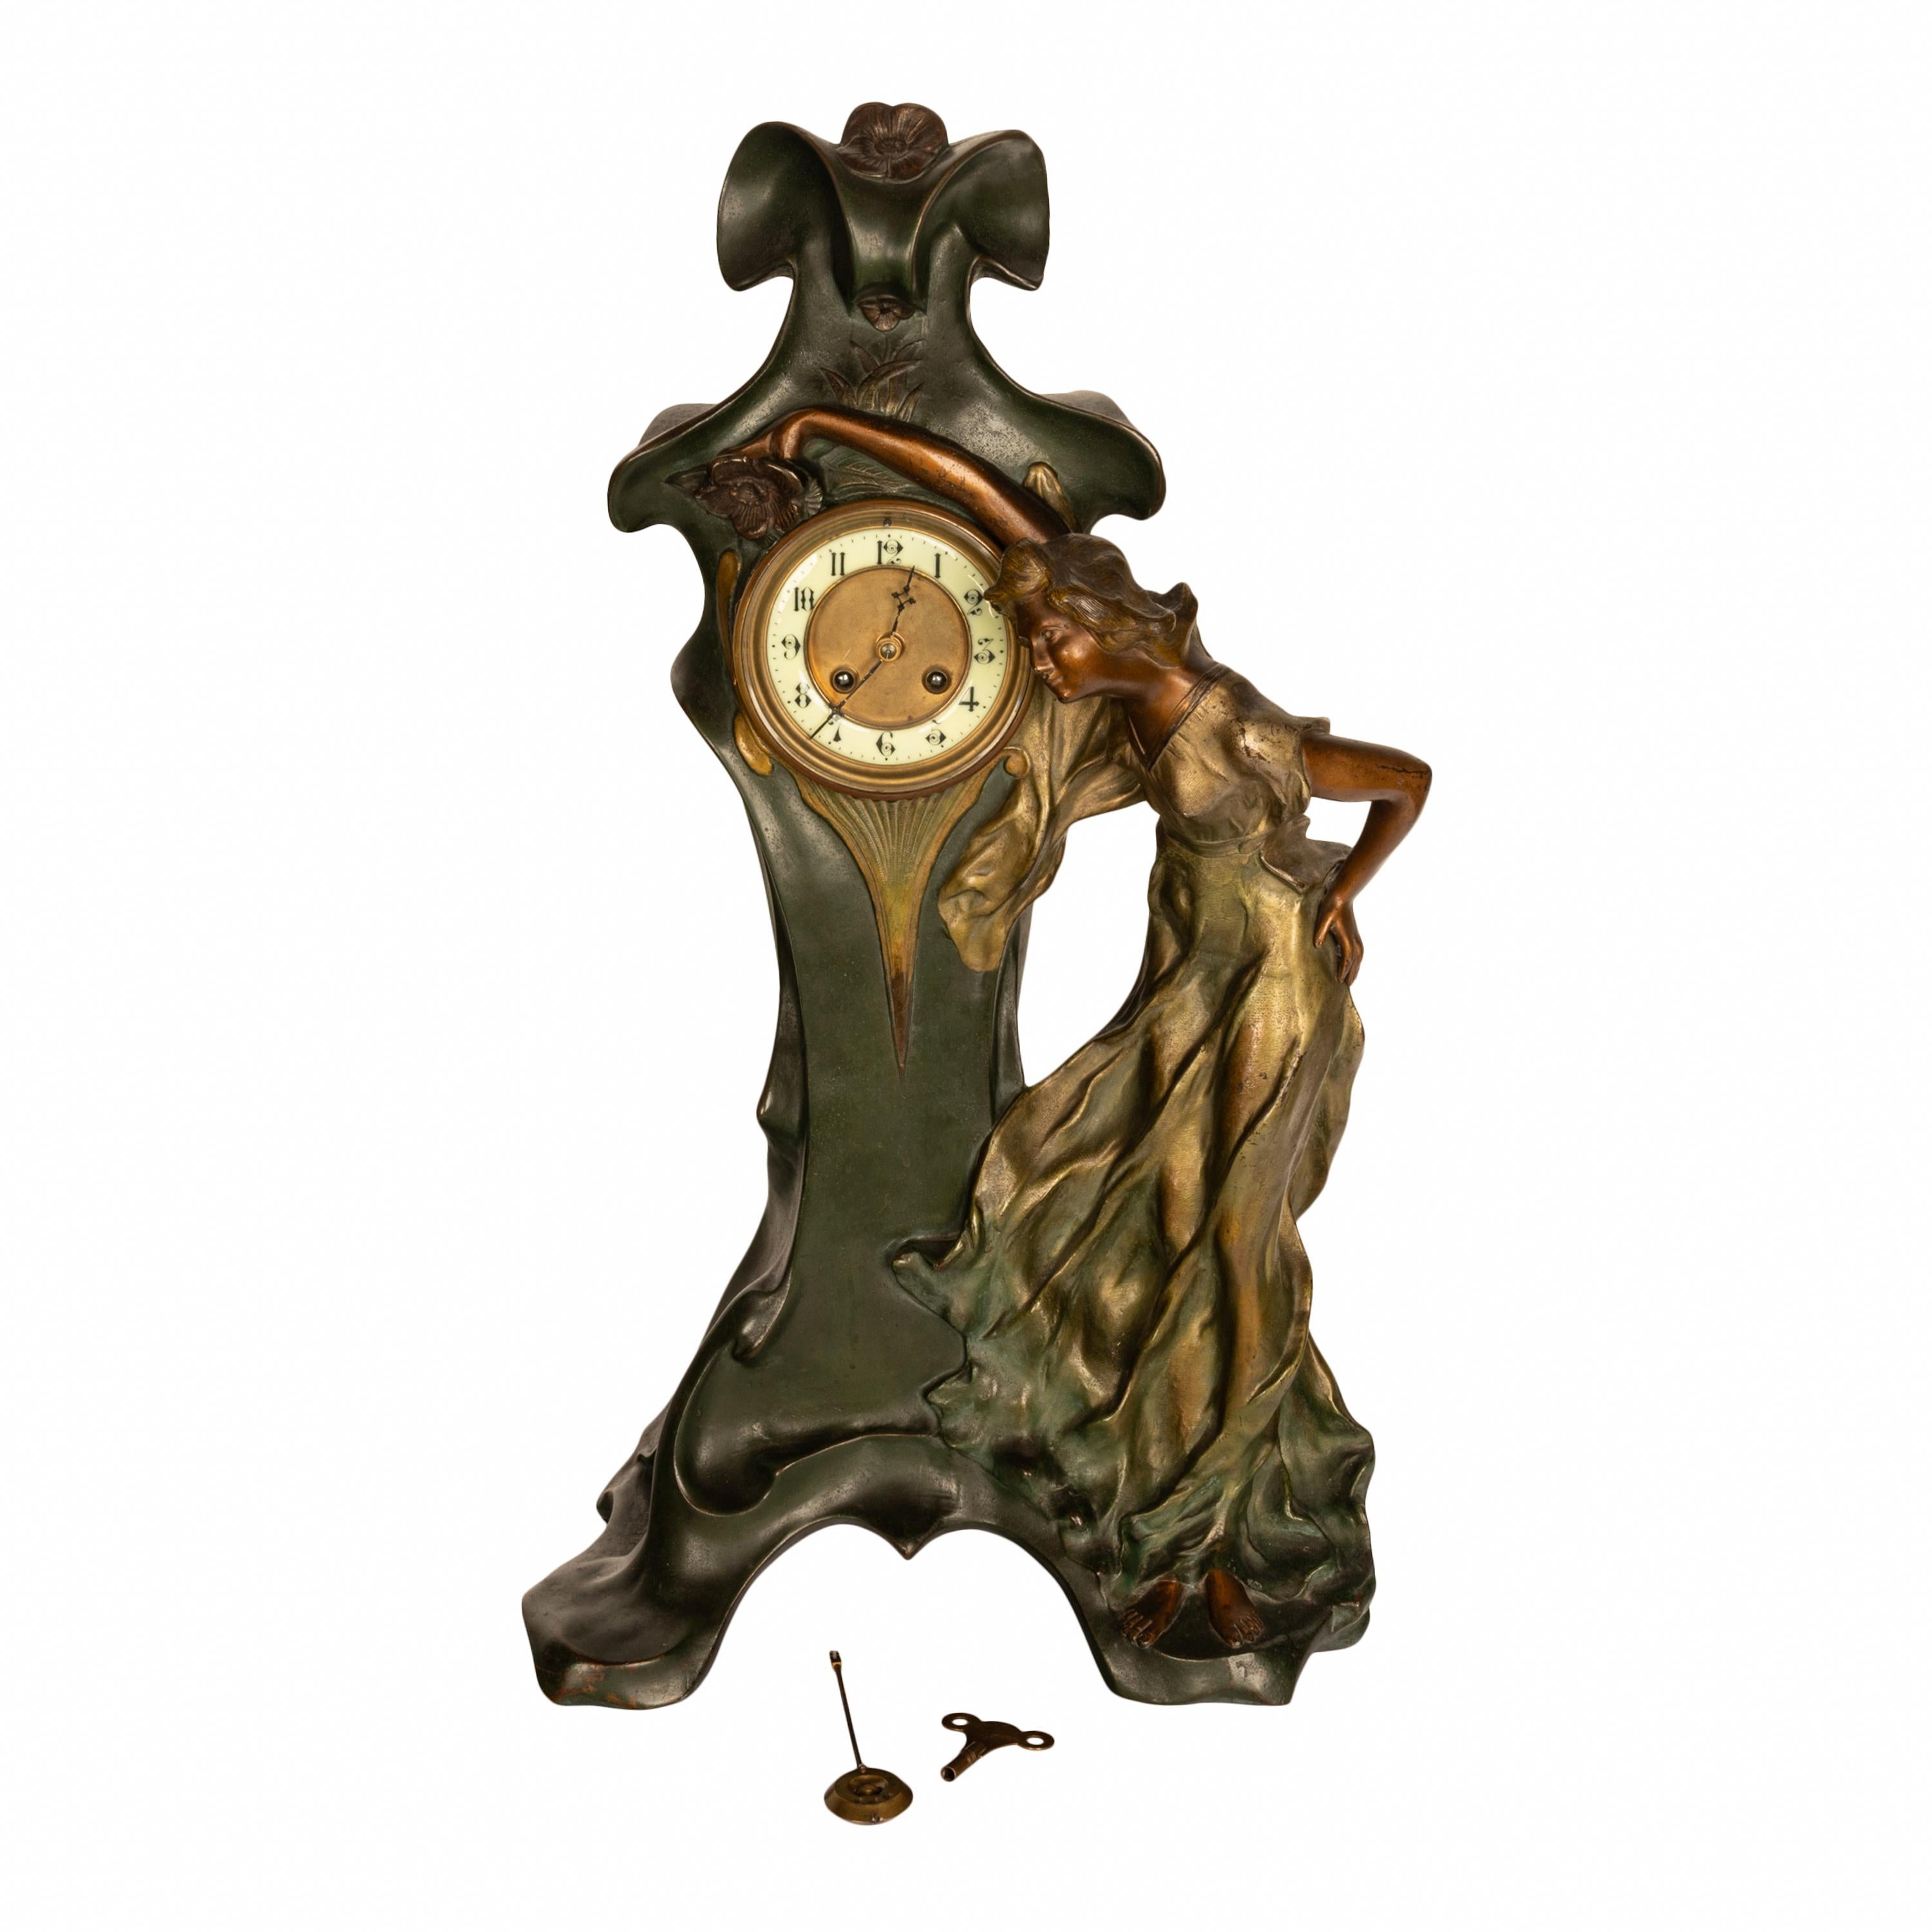 Antique French Art Nouveau Cold-Painted Bronze Figural Statue 8 Day Clock 1900 For Sale 10